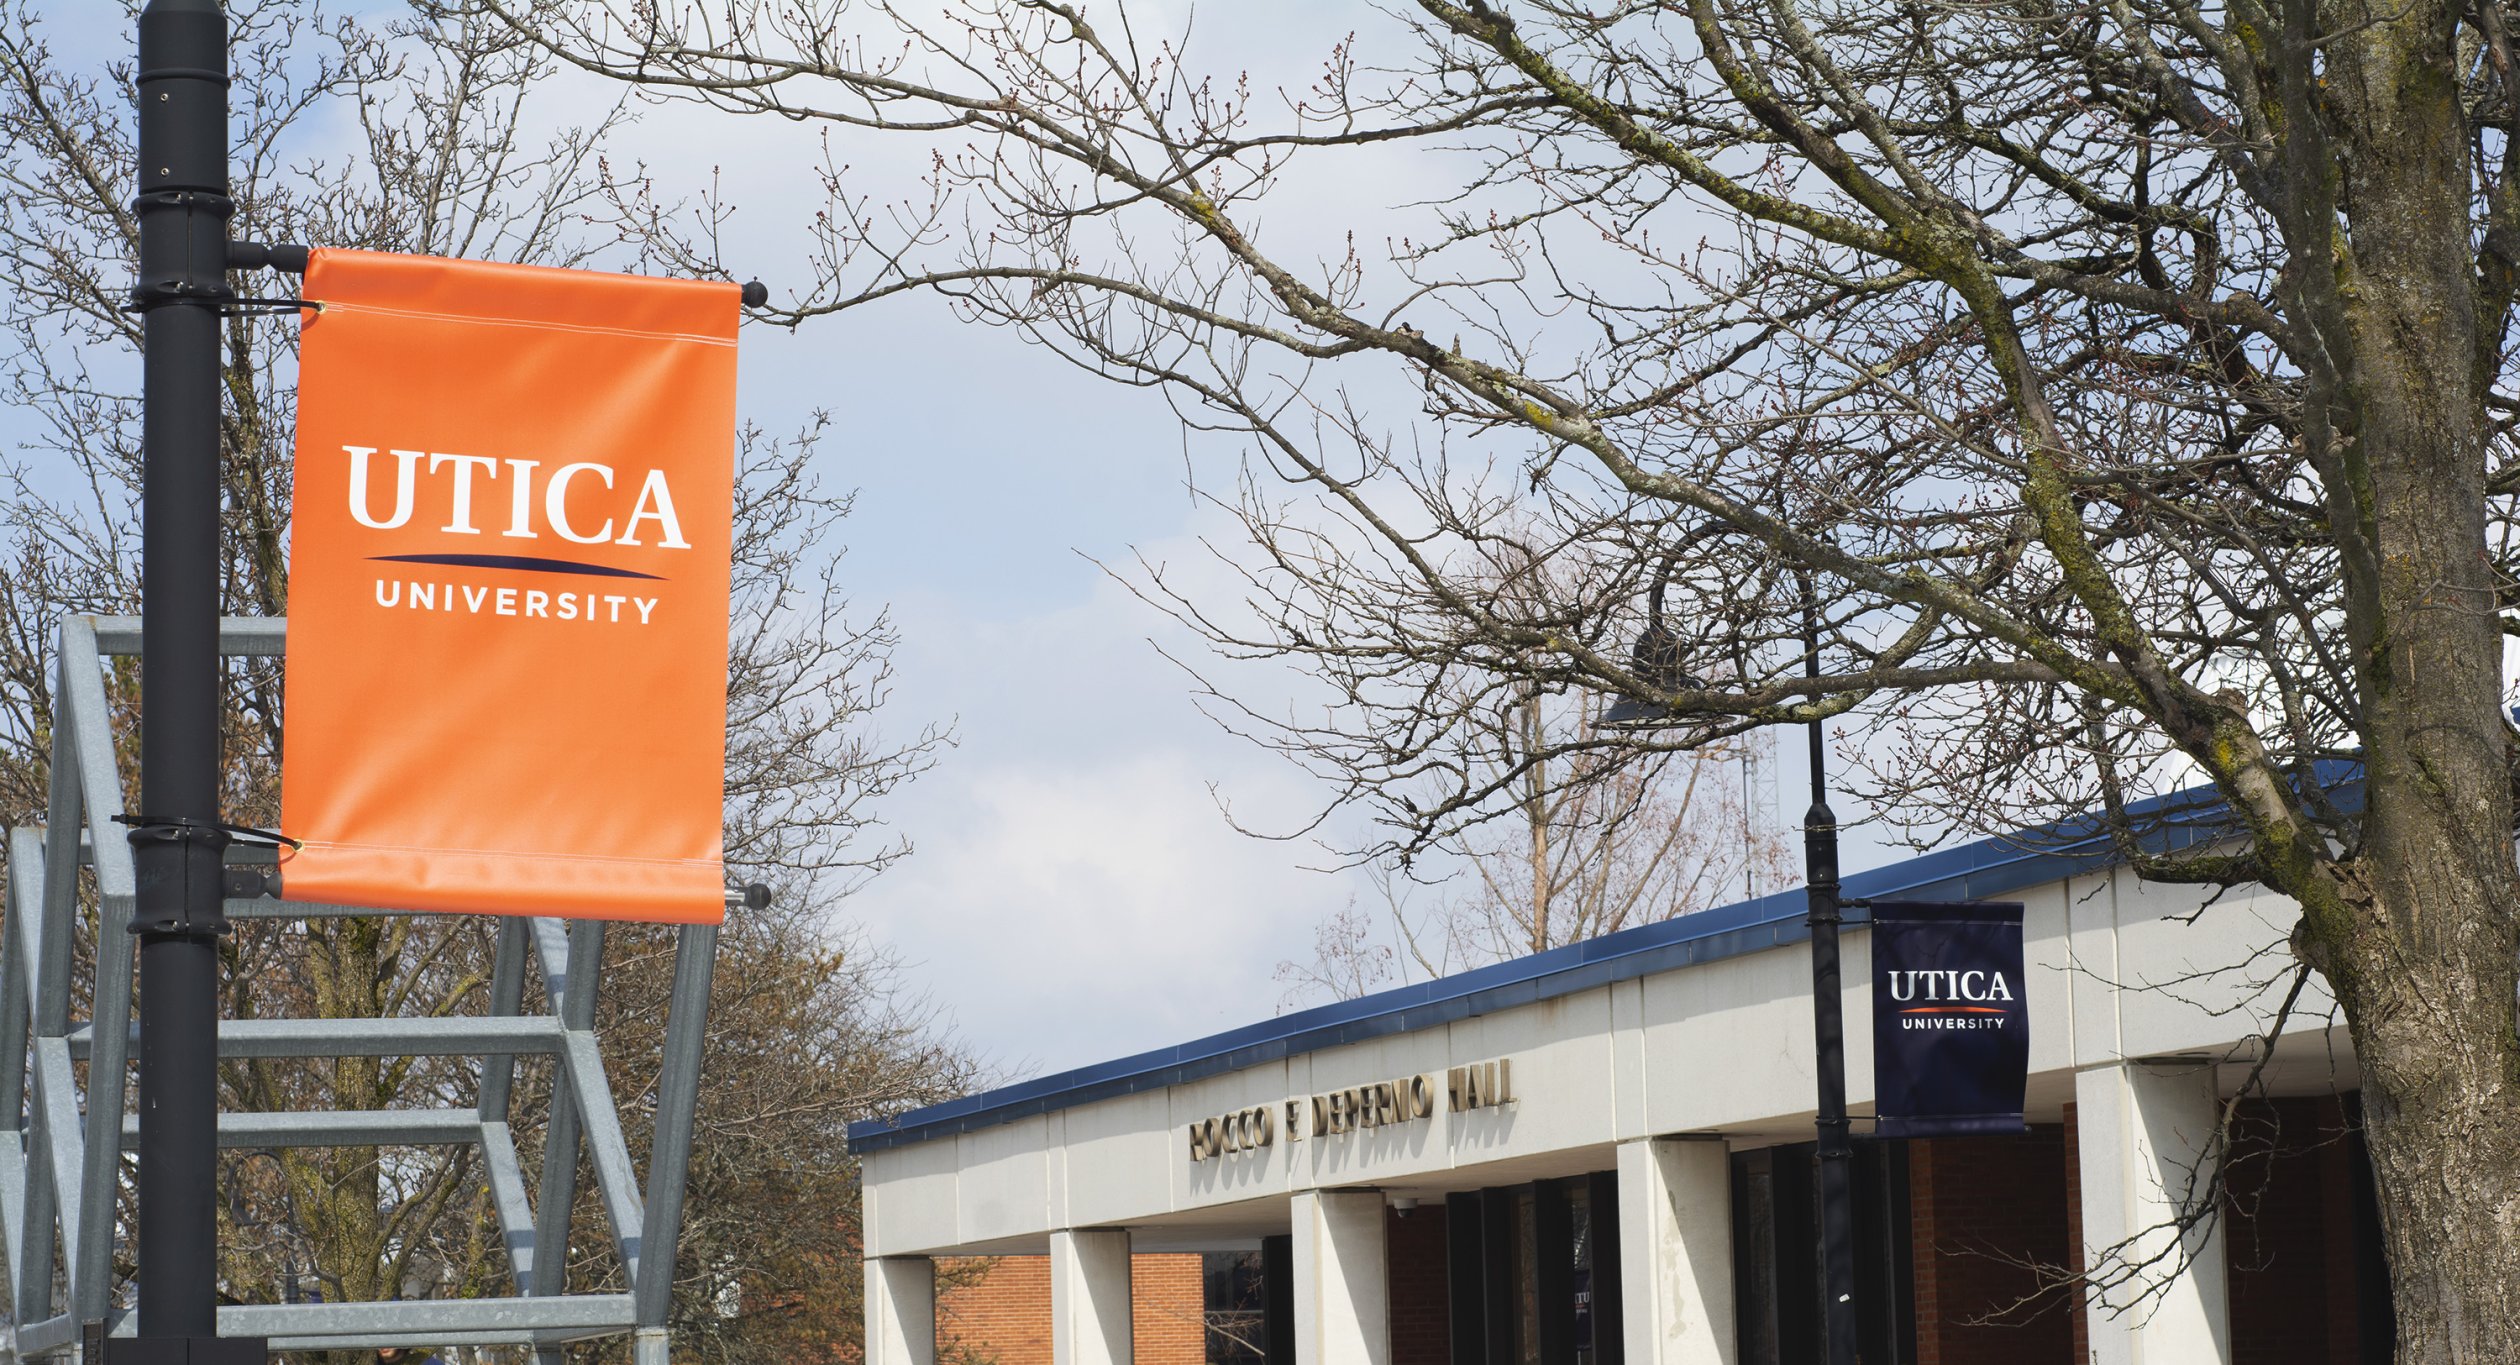 Utica University banners hang outside Rocco DePerno Hall.